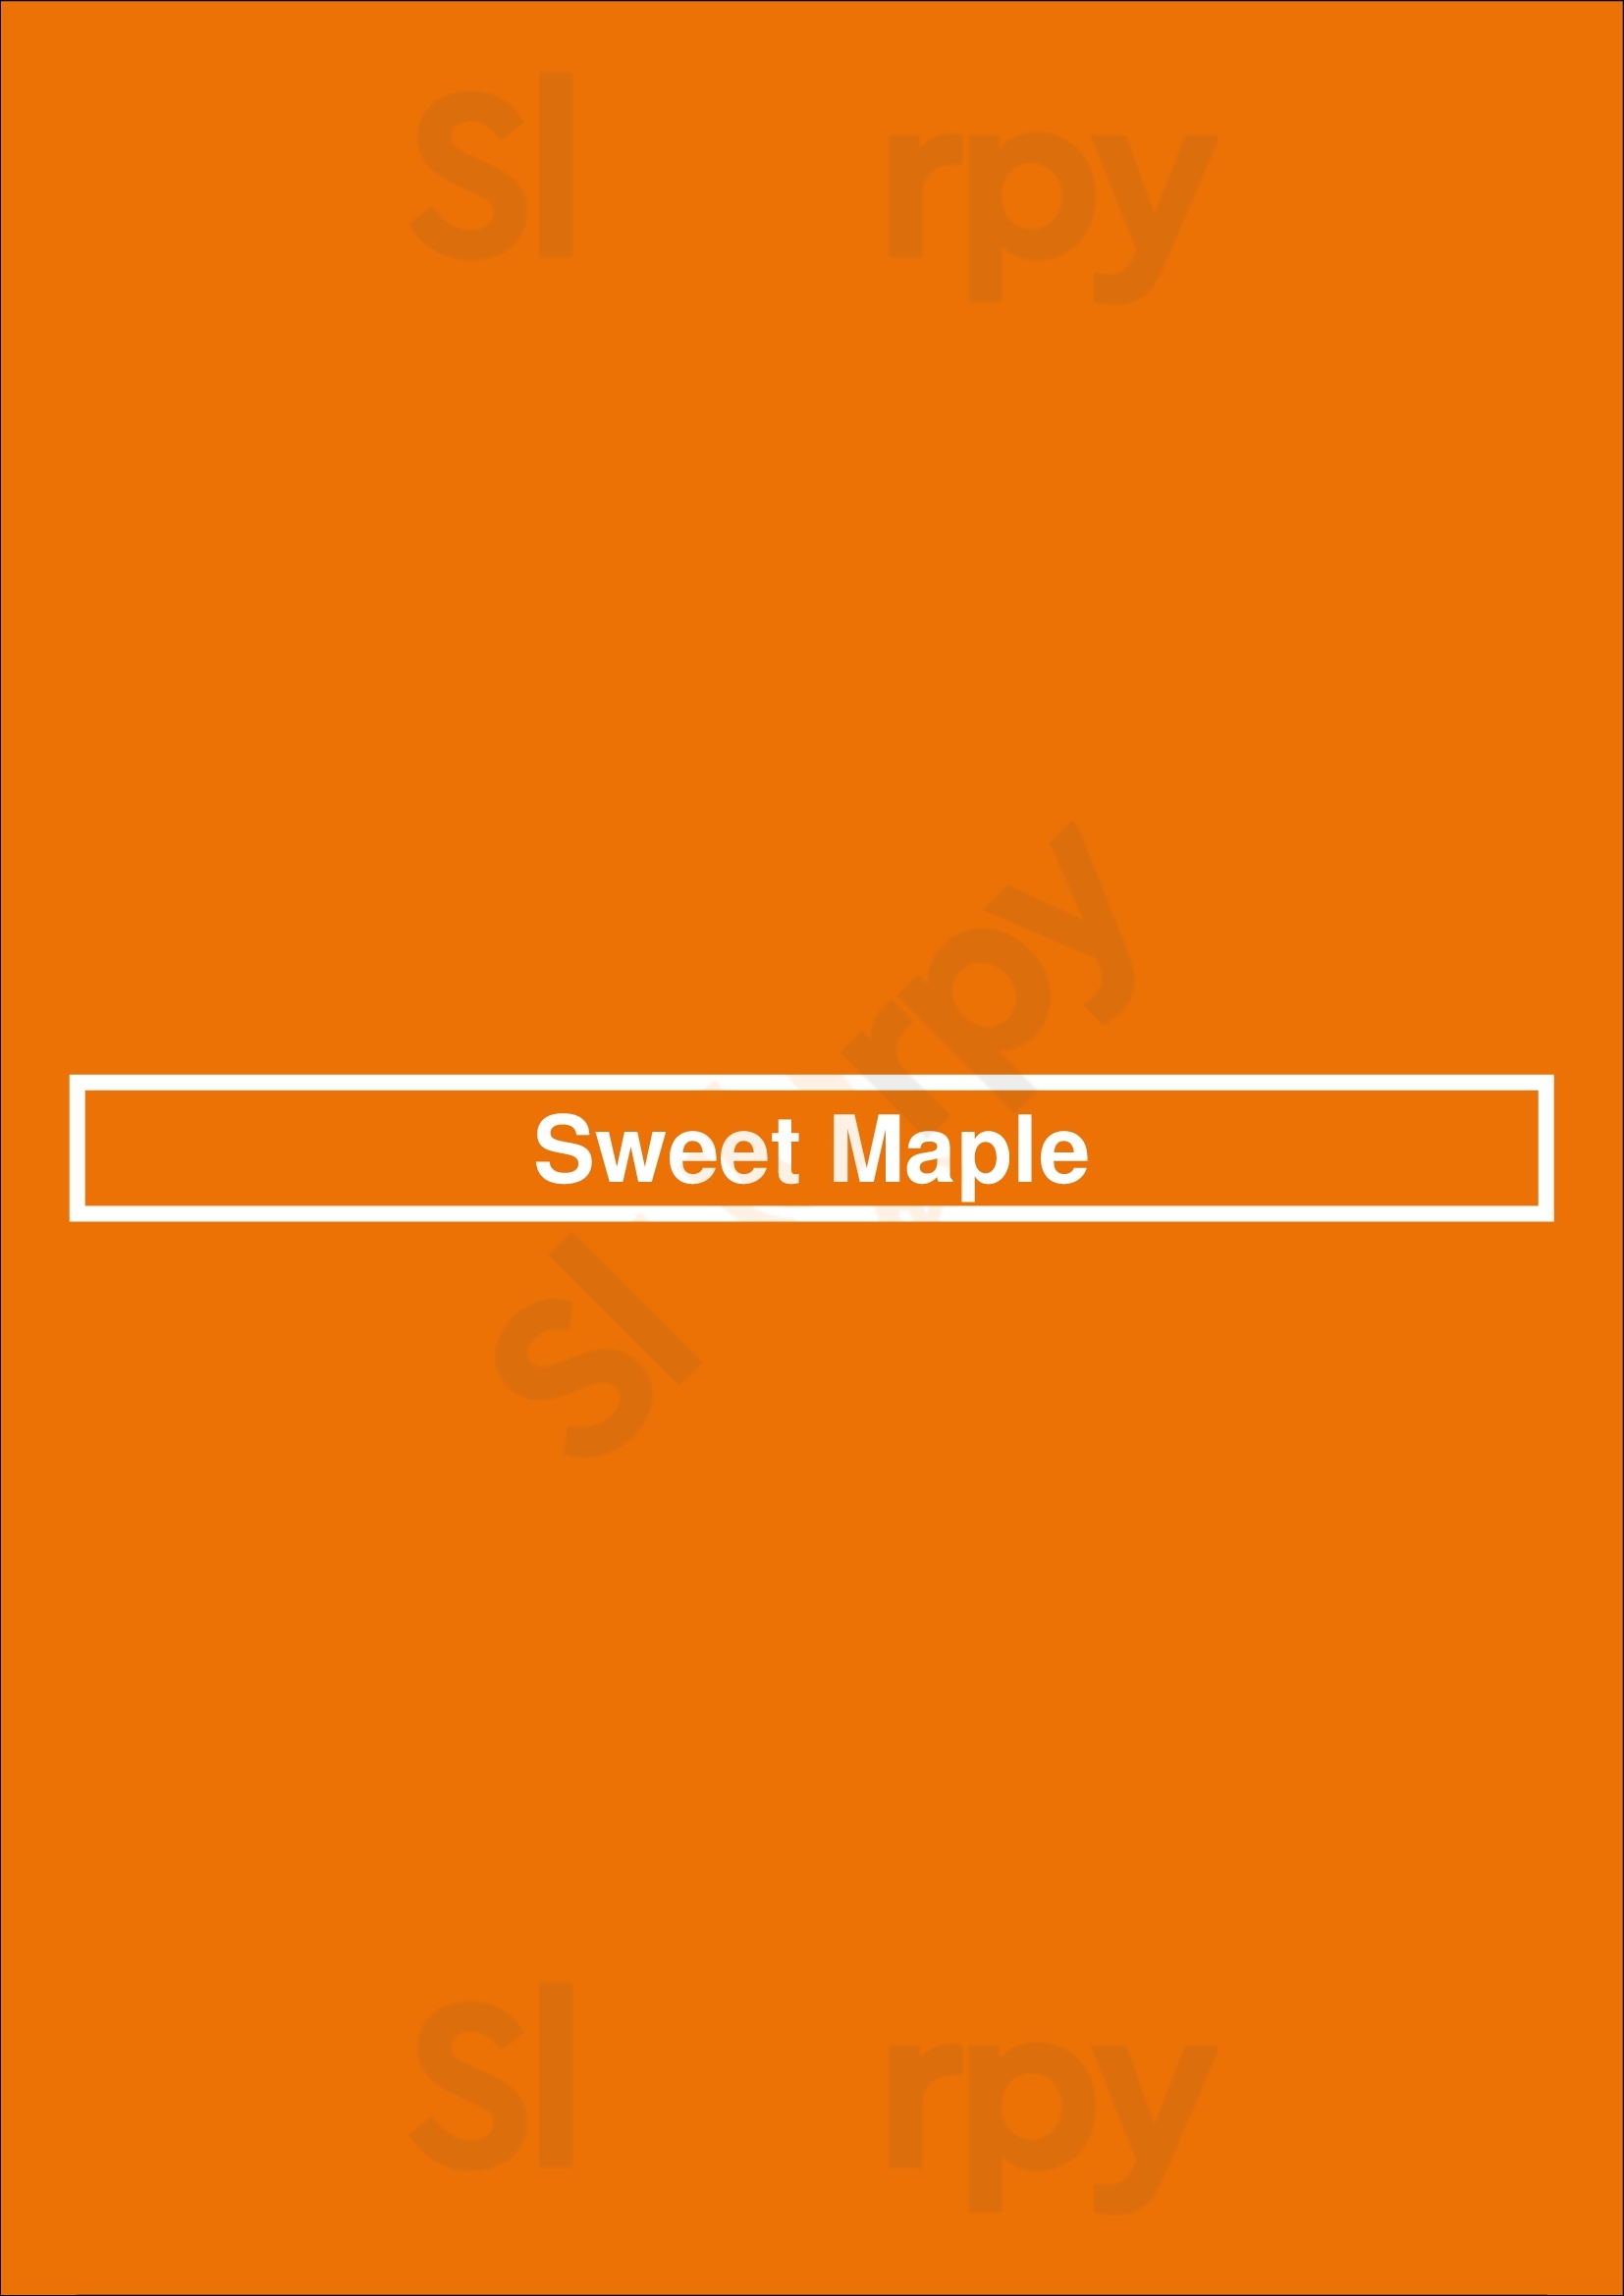 Sweet Maple San Francisco Menu - 1